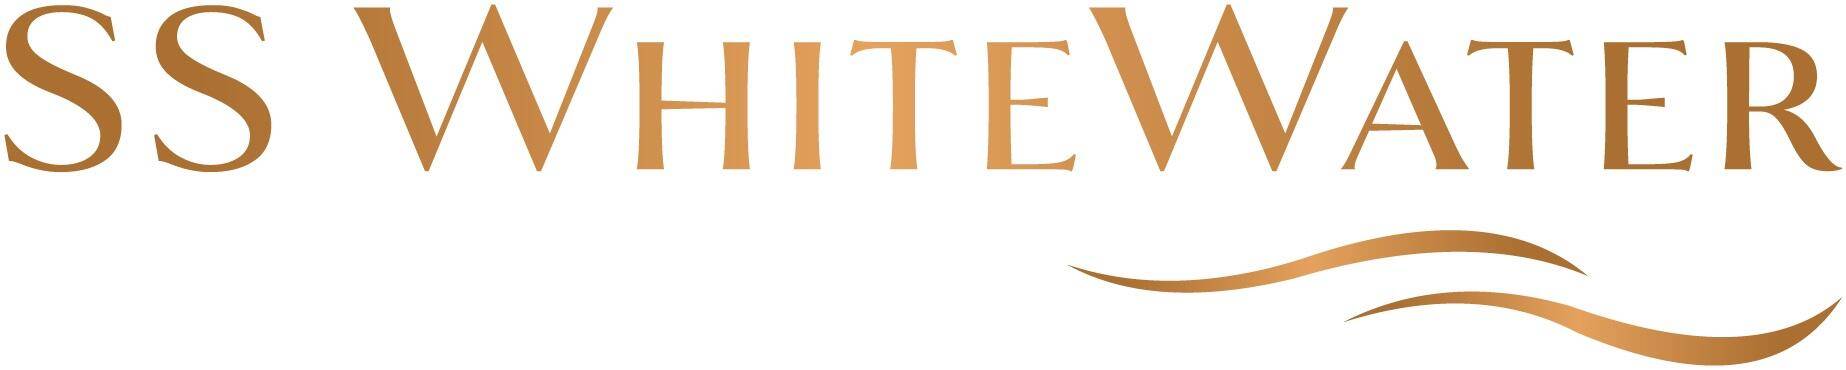 SS Whitewater Logo